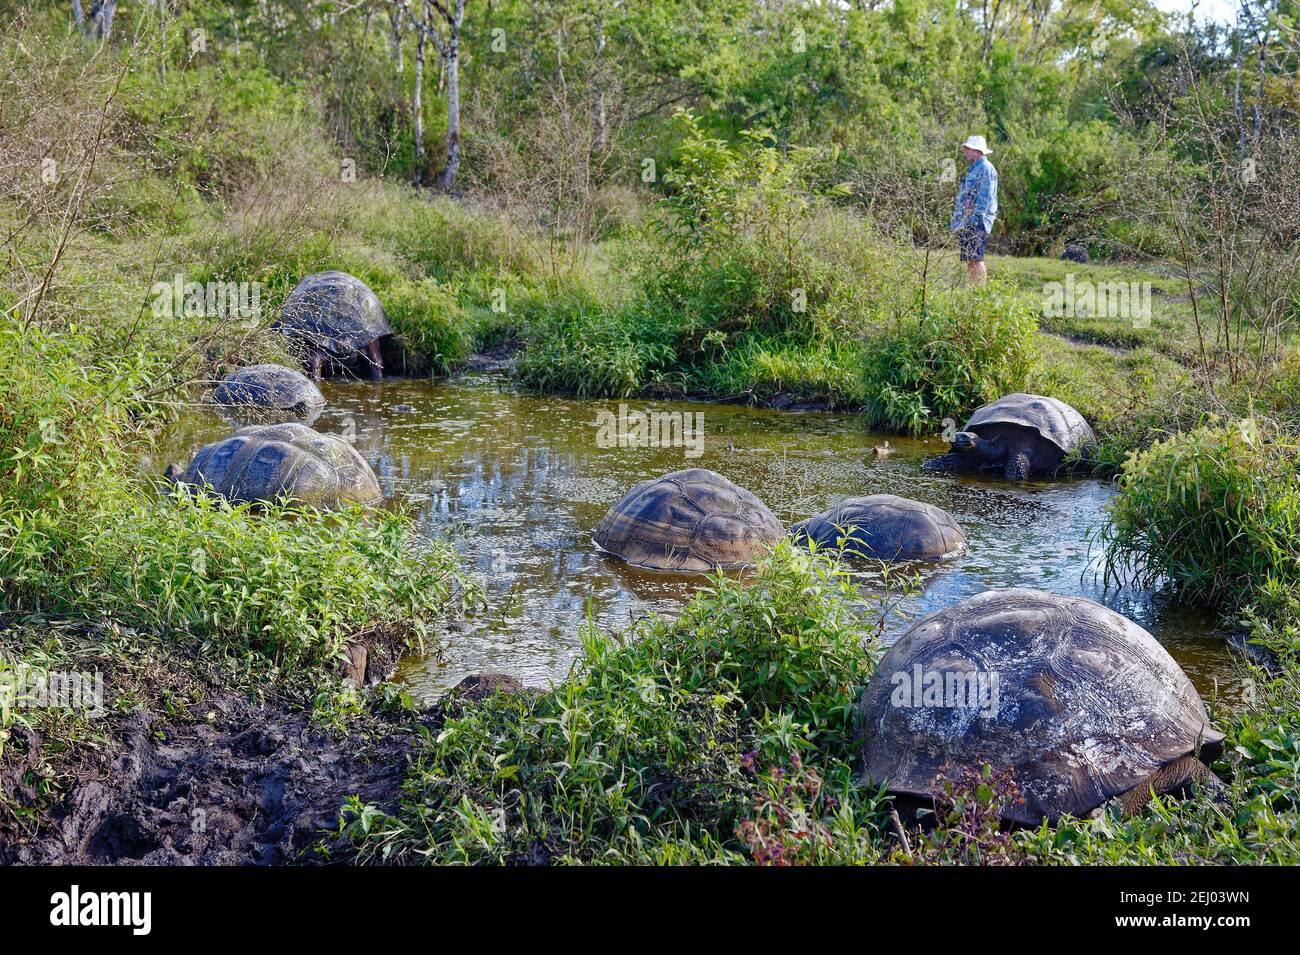 Galapagos Giant Tortoises, group, pond, wildlife, large reptiles, animal, herbivore, long lived, water, man, Chelonoidis nigra, South America, Galapag Stock Photo